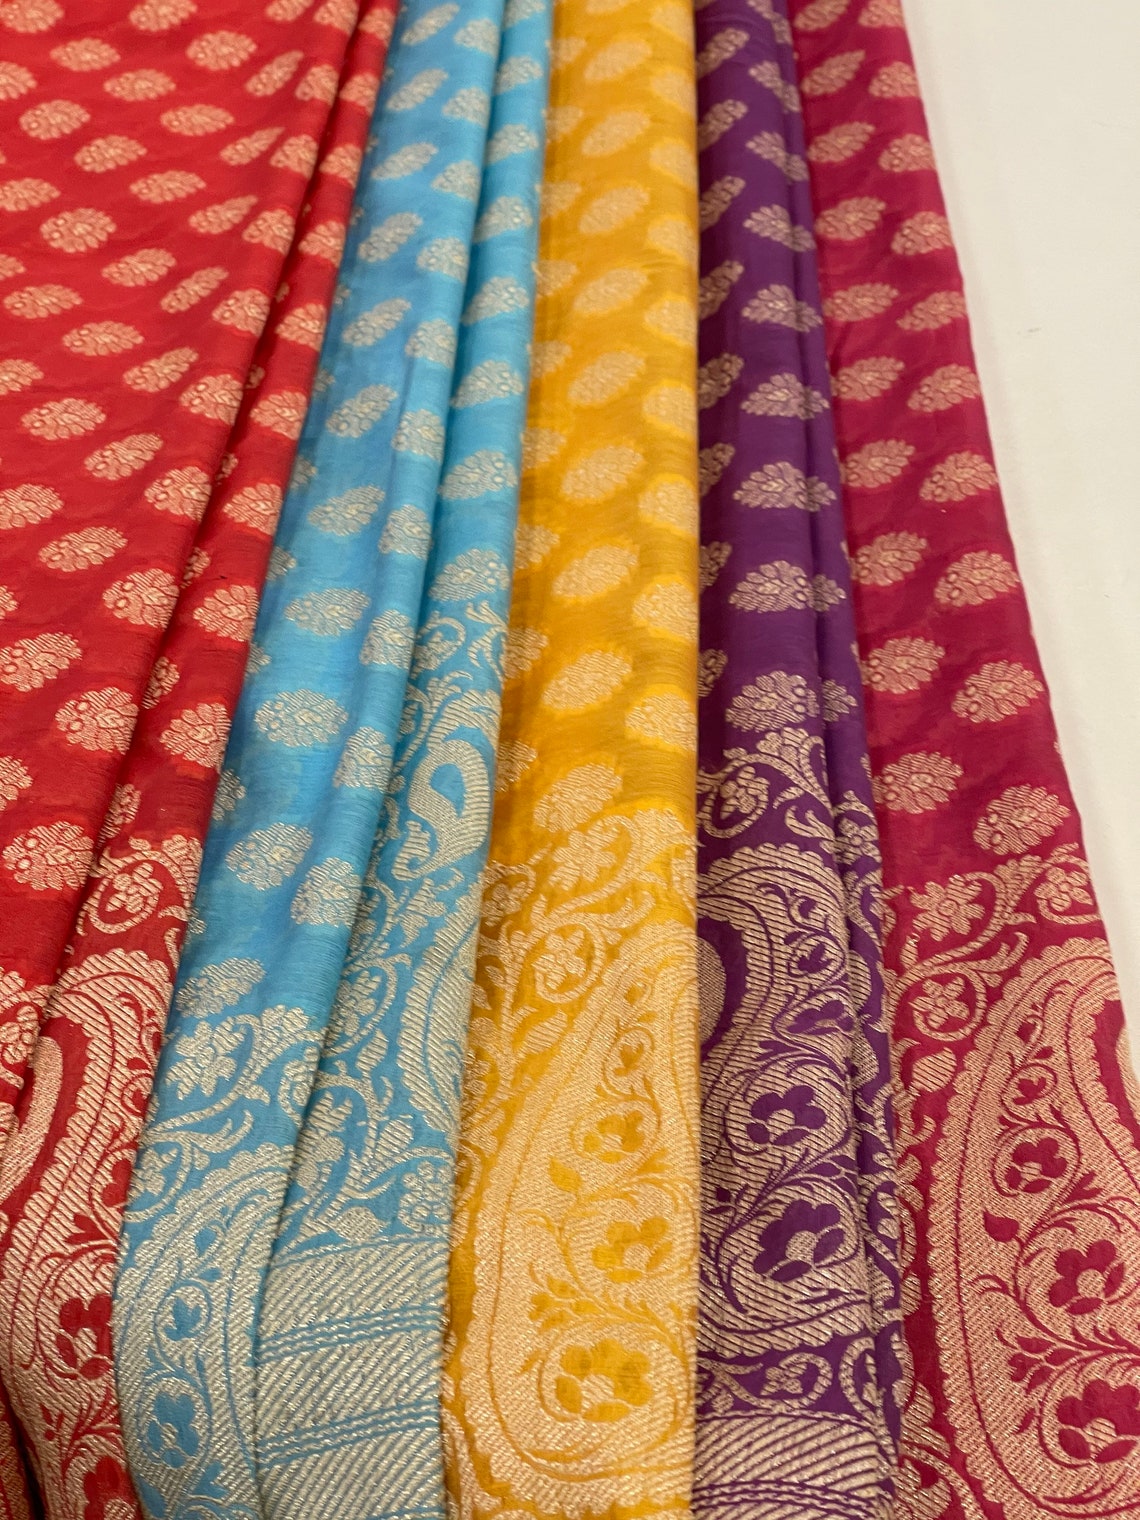 Banarasi Silk Dupatta/scarf Gold Handwoven Indian | Etsy